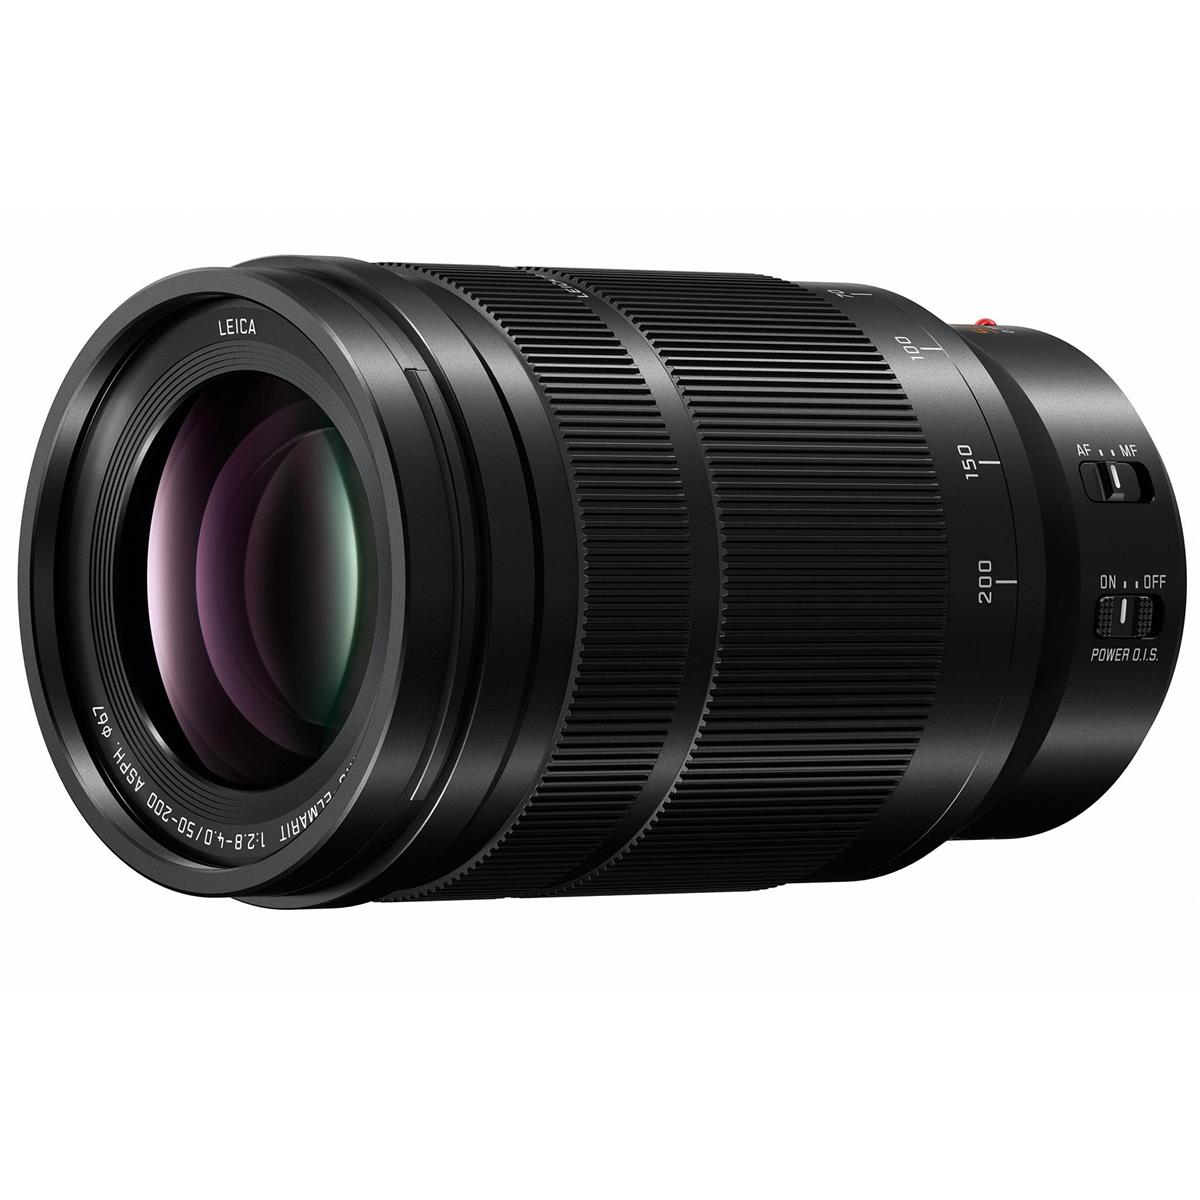 Just Announced – Panasonic Lumix 50-200mm Lens